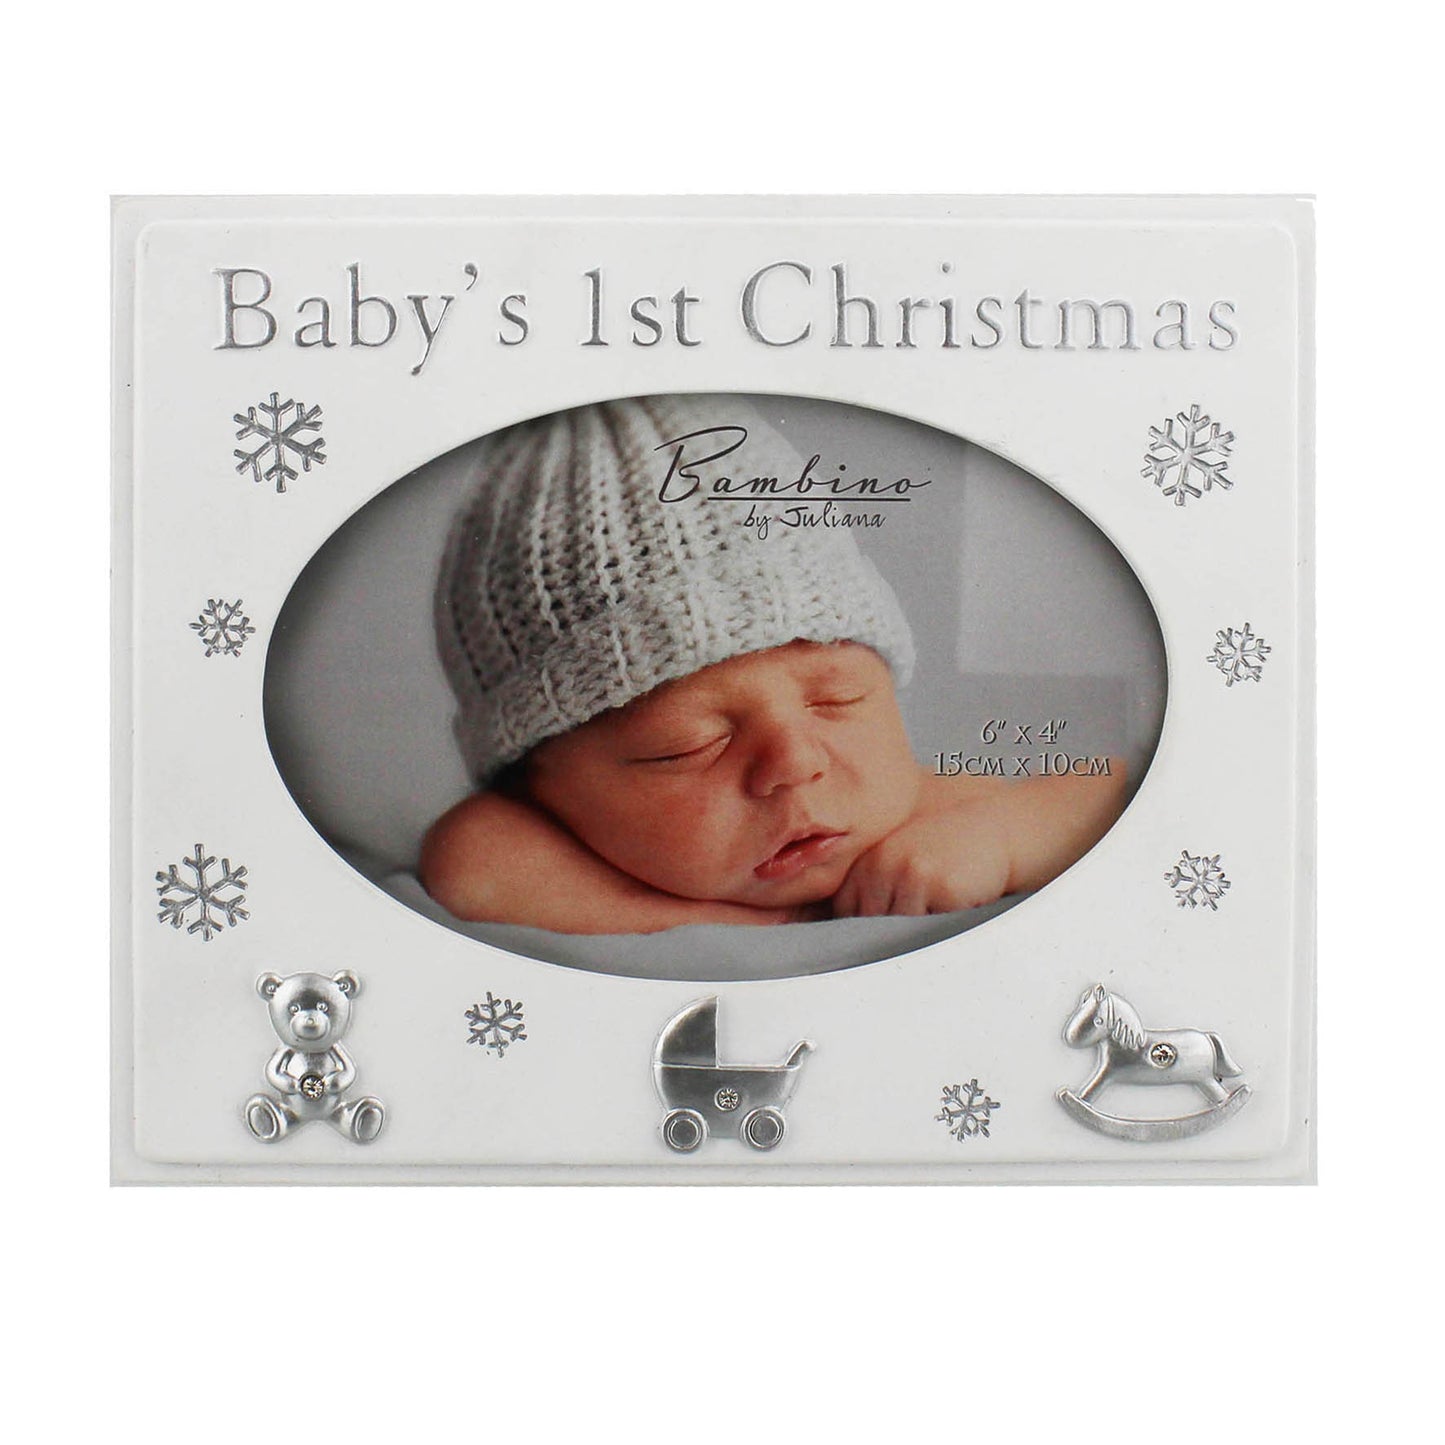 Bambino Baby's 1st Christmas Photo Frame - 6" X 4"